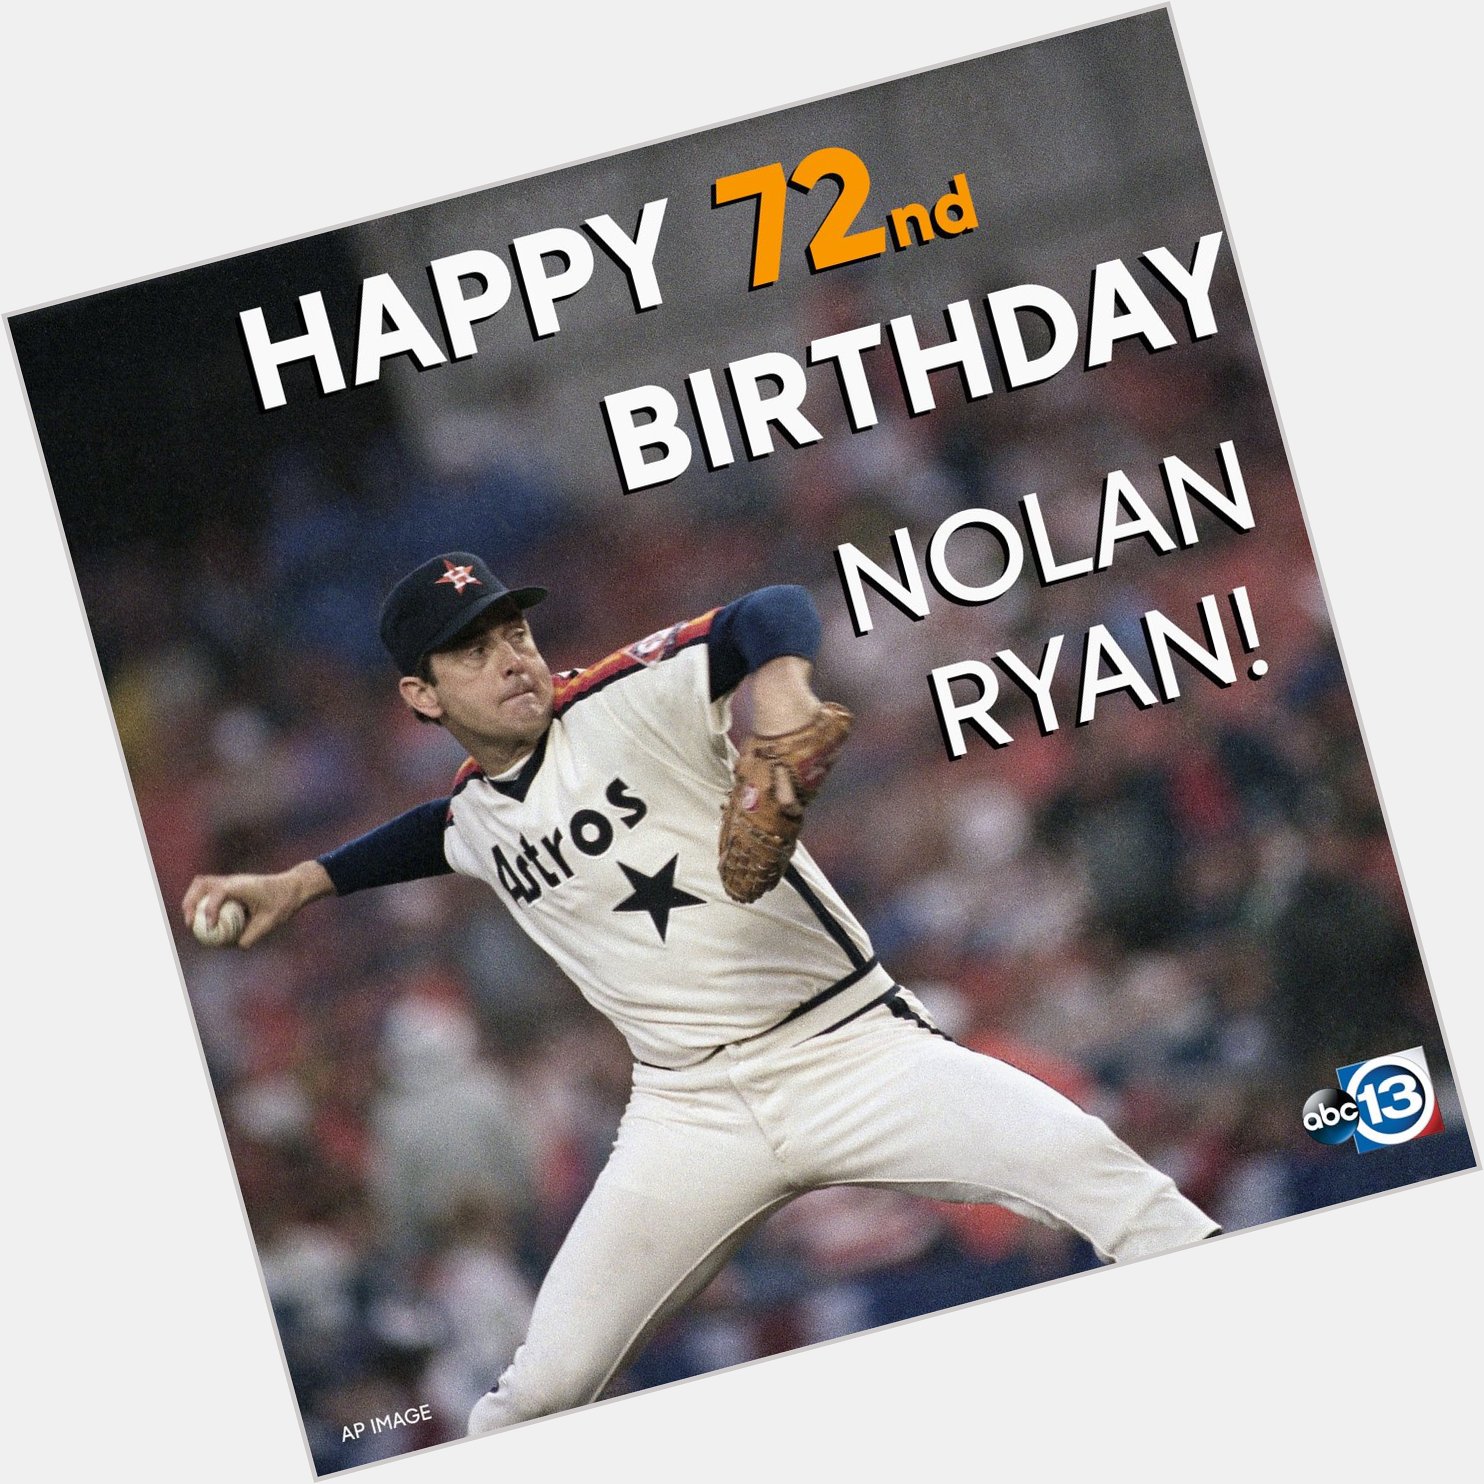 Happy bday to the legend, Nolan Ryan 